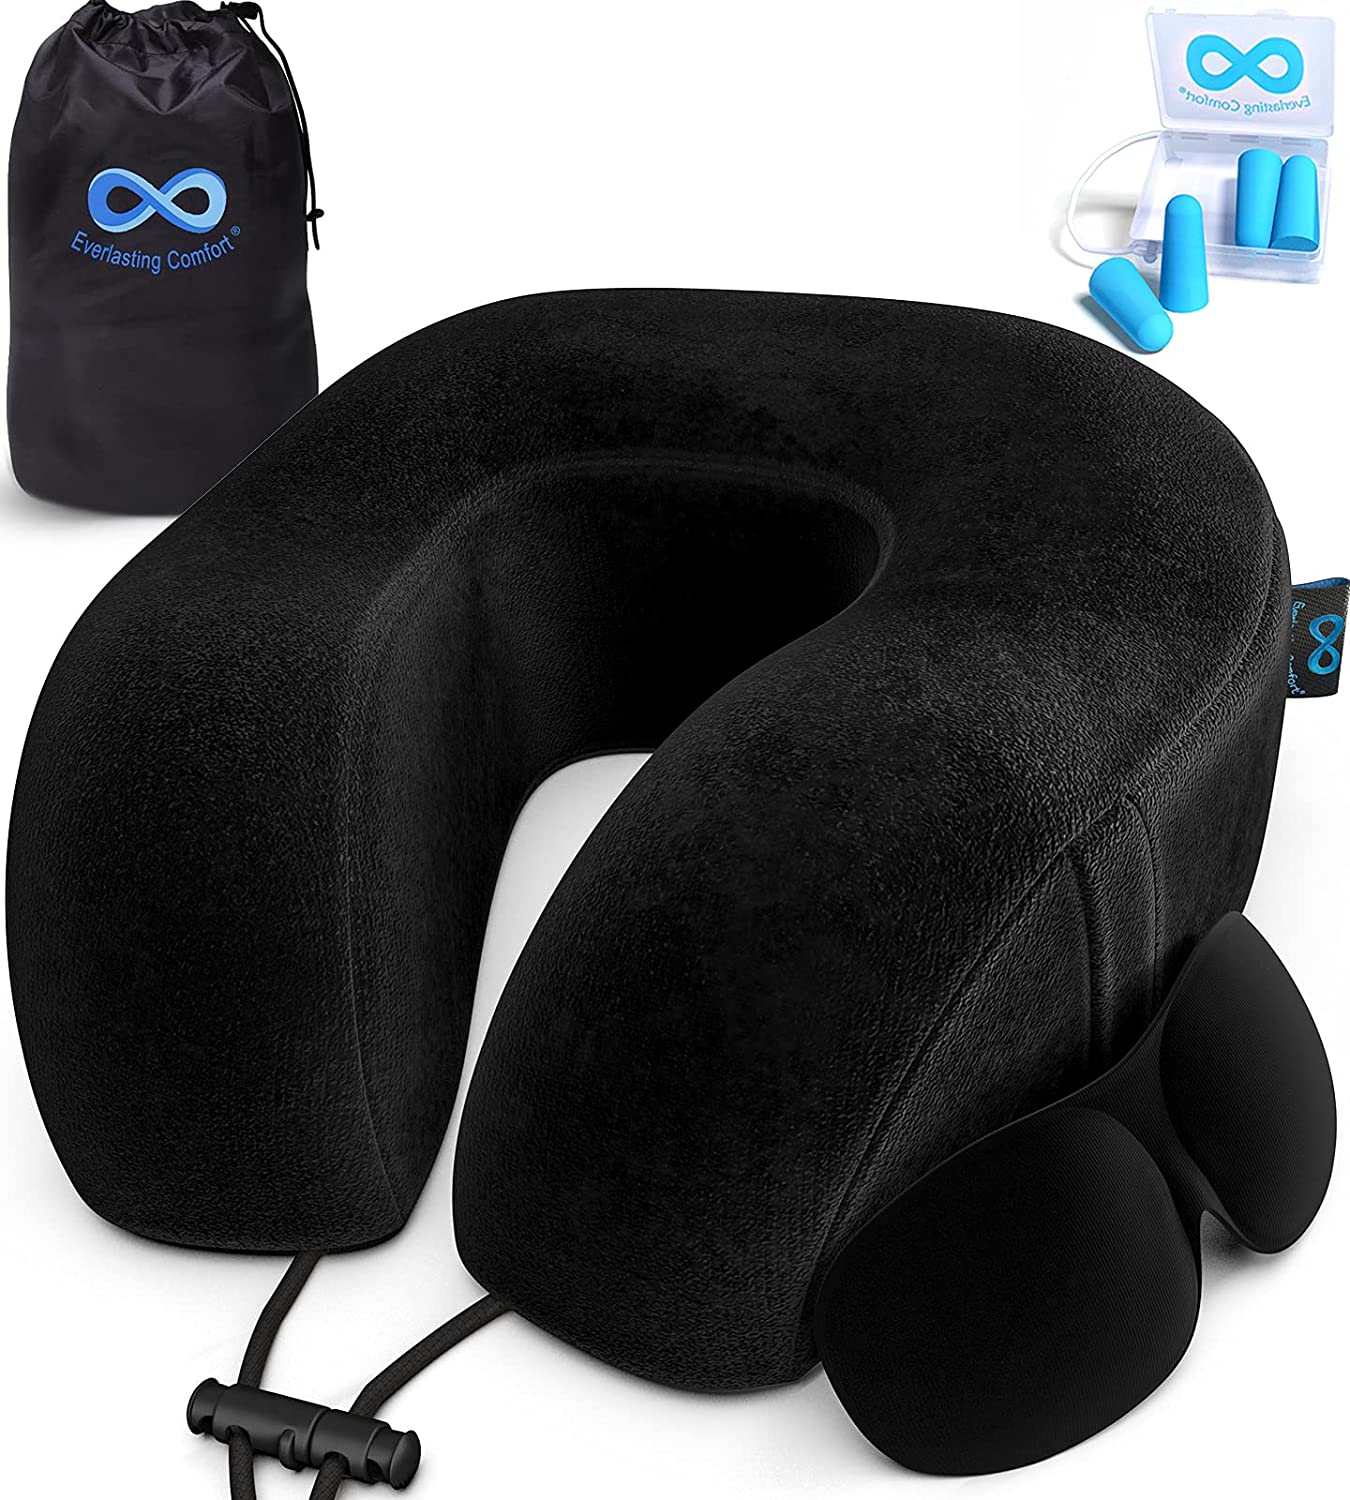 Everlasting Comfort Memory Foam Travel Pillow – Airplane Neck Rest & Plane Accessories (Black)